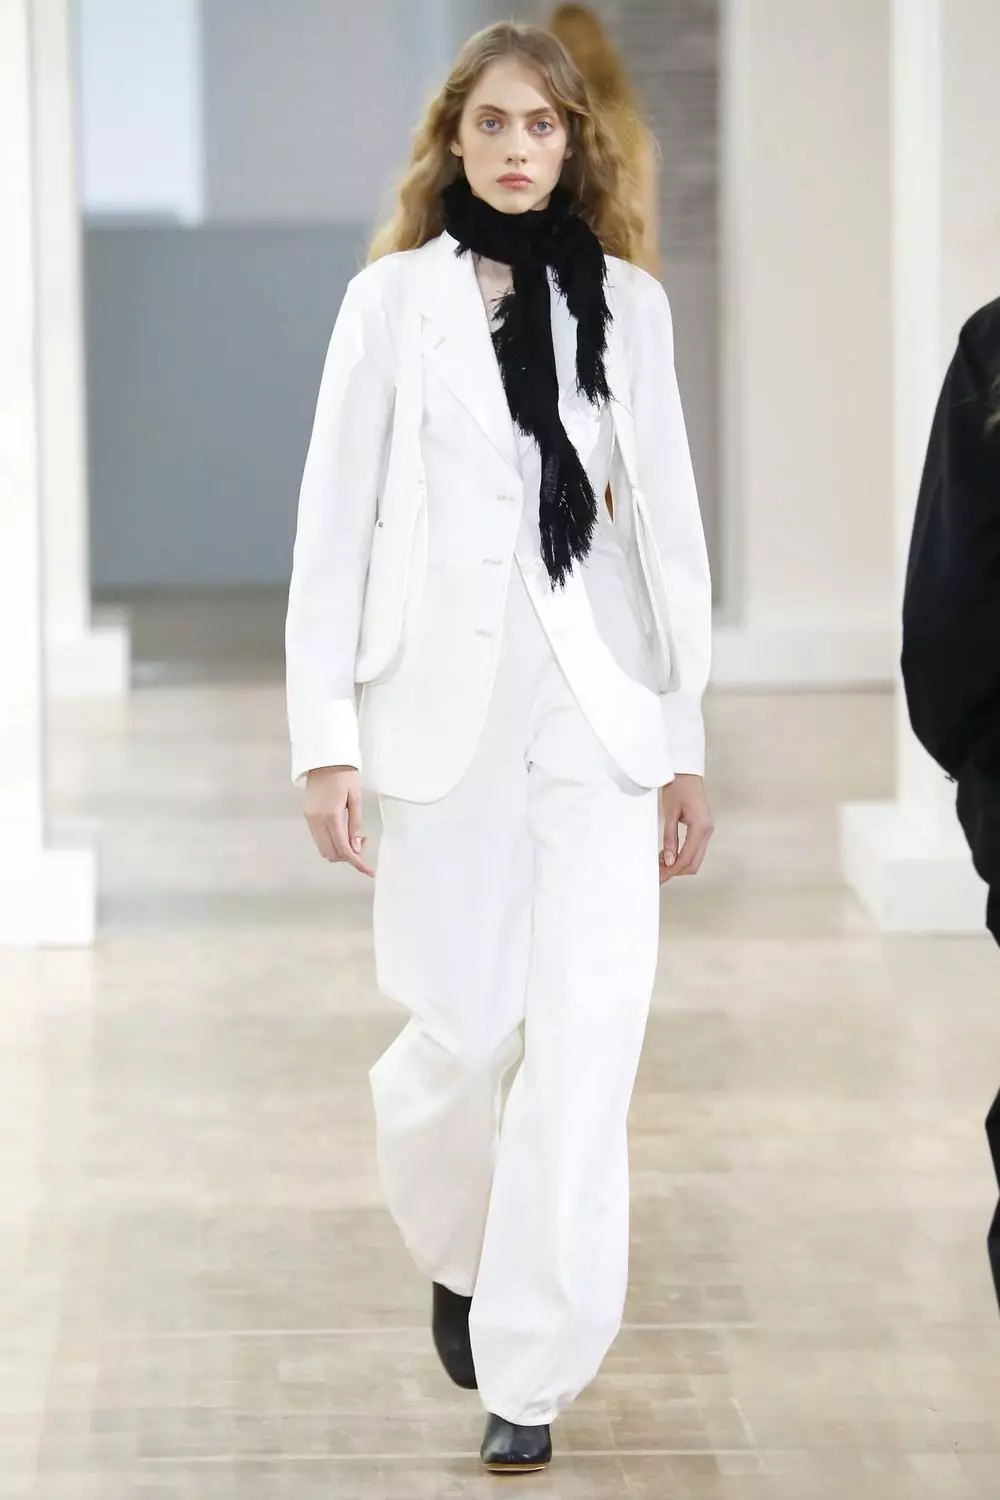 Trouser Կանացի զգեստներ 2021 (242 լուսանկար). Նոր եւ նորաձեւության միտումները, Chanel ոճը 14844_173